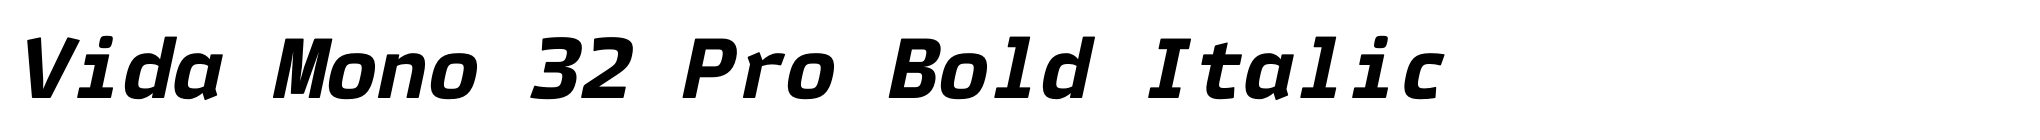 Vida Mono 32 Pro Bold Italic image